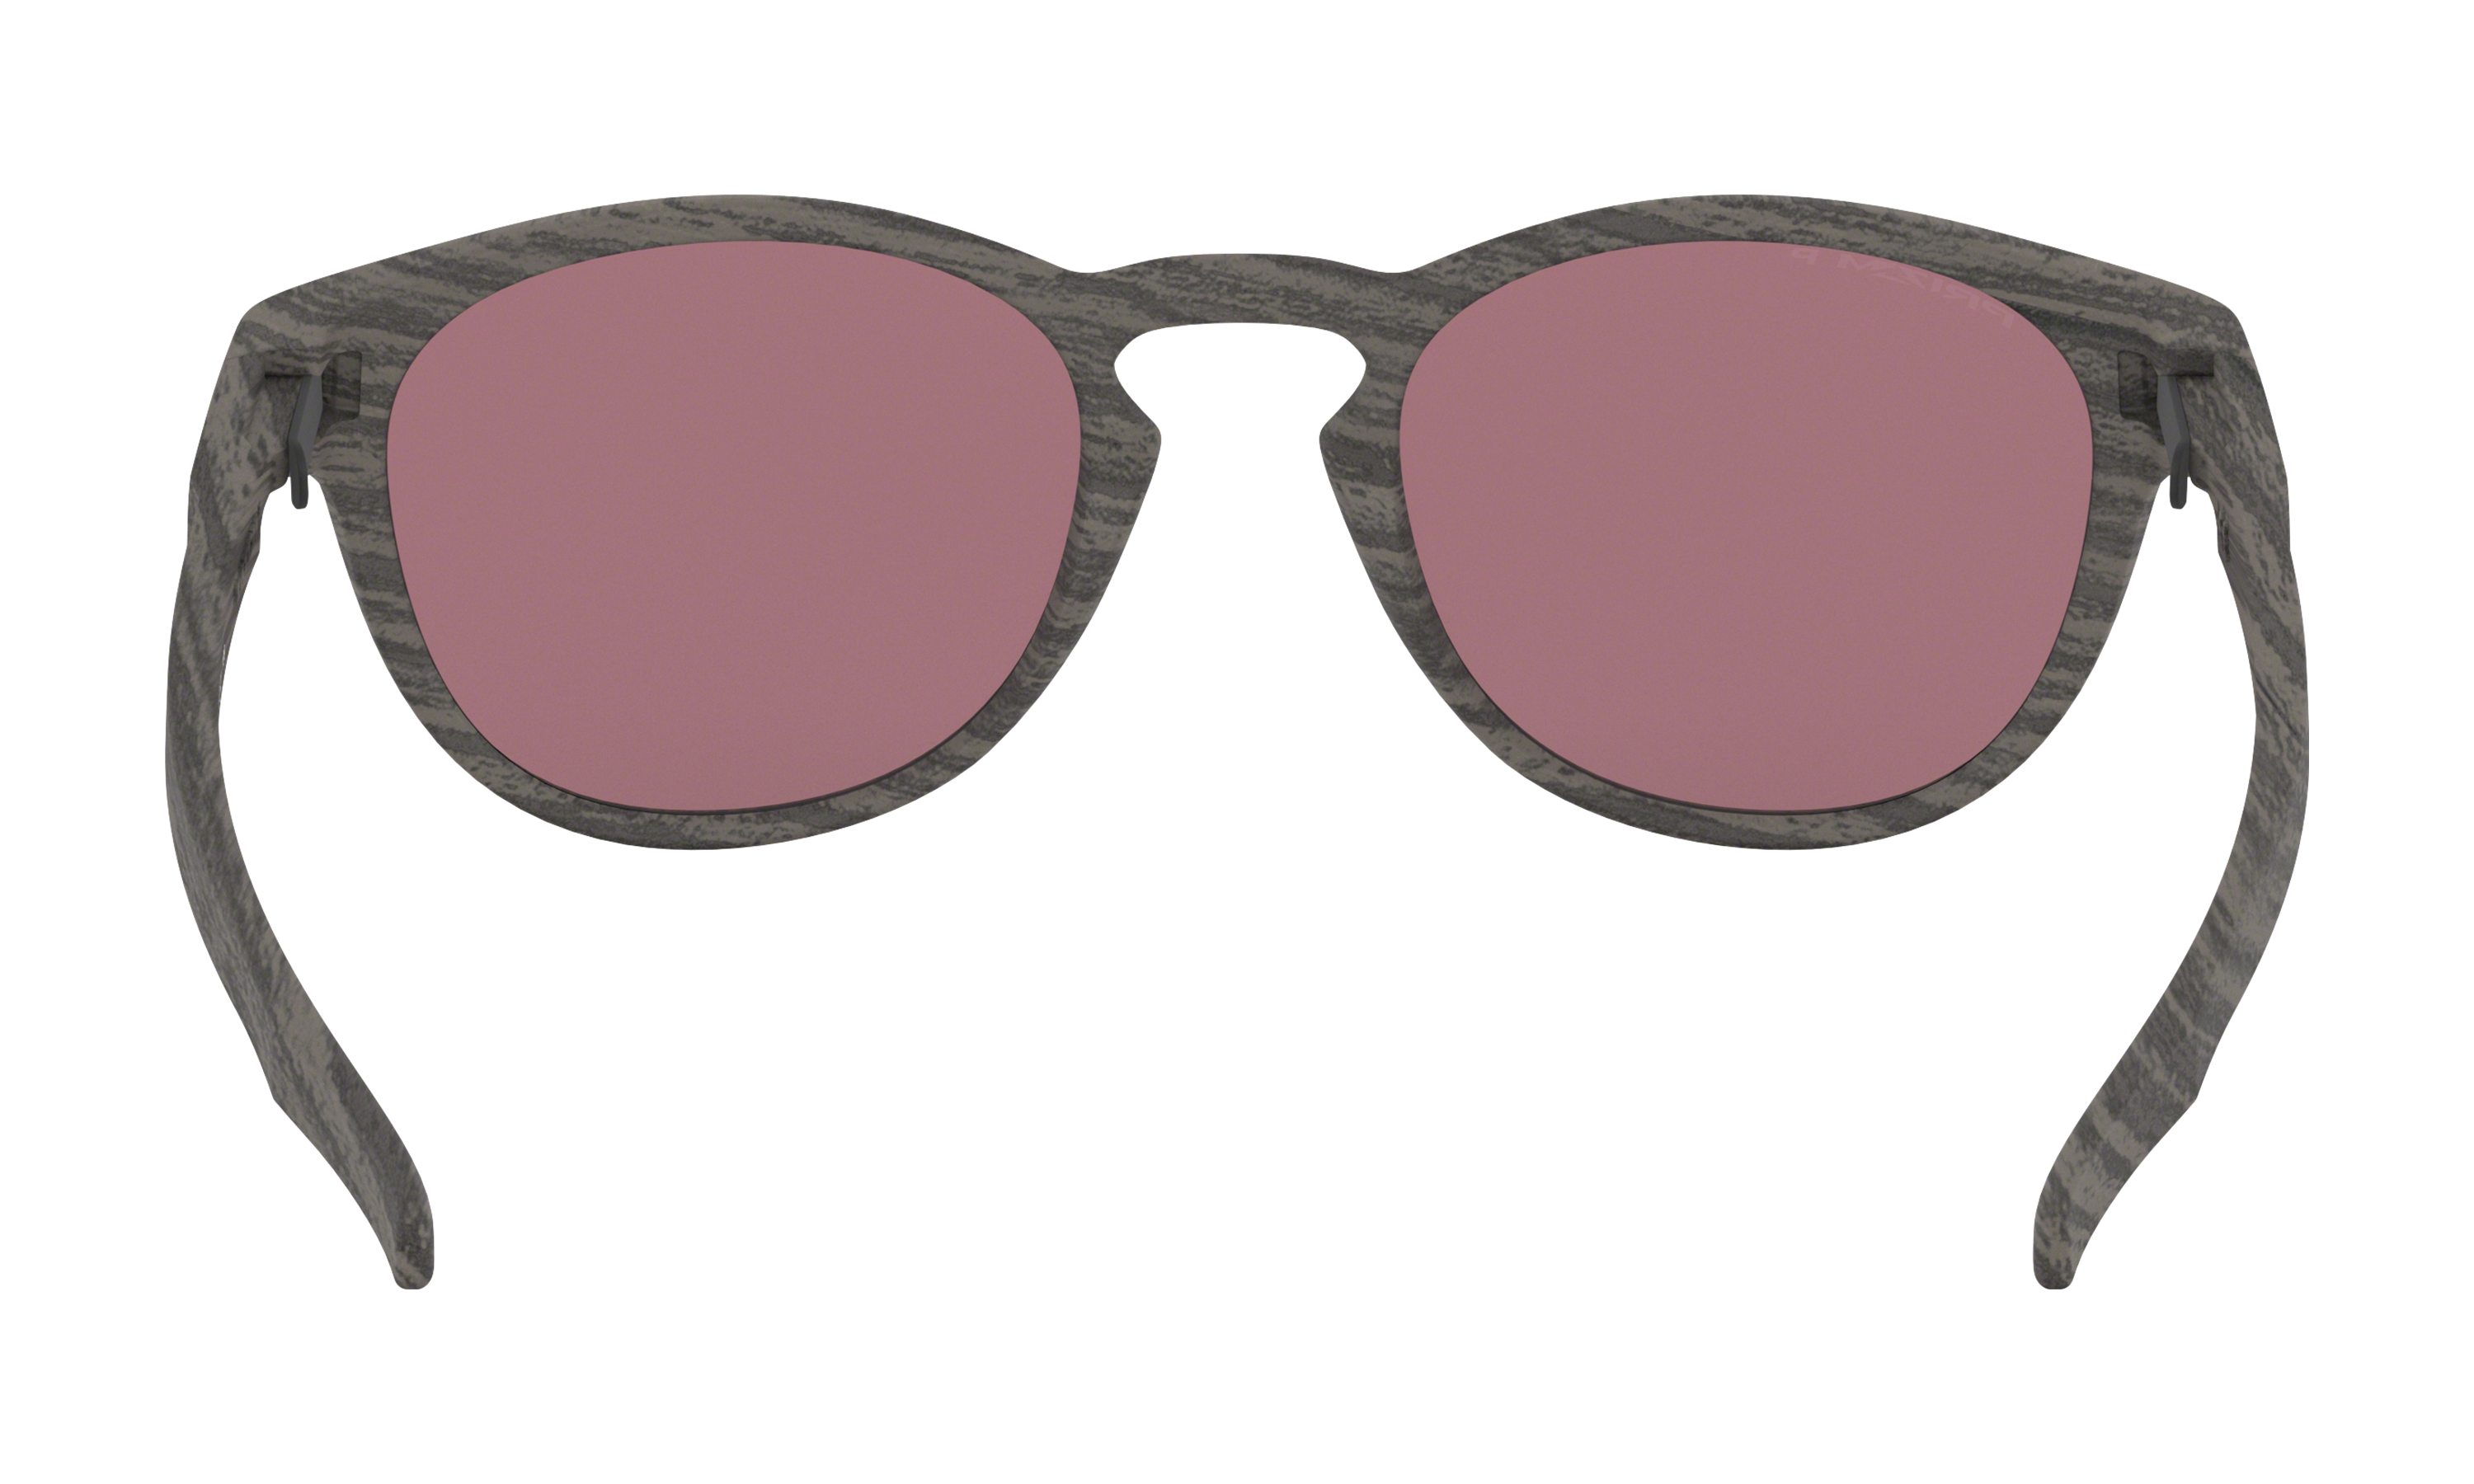 latch oakley sunglasses